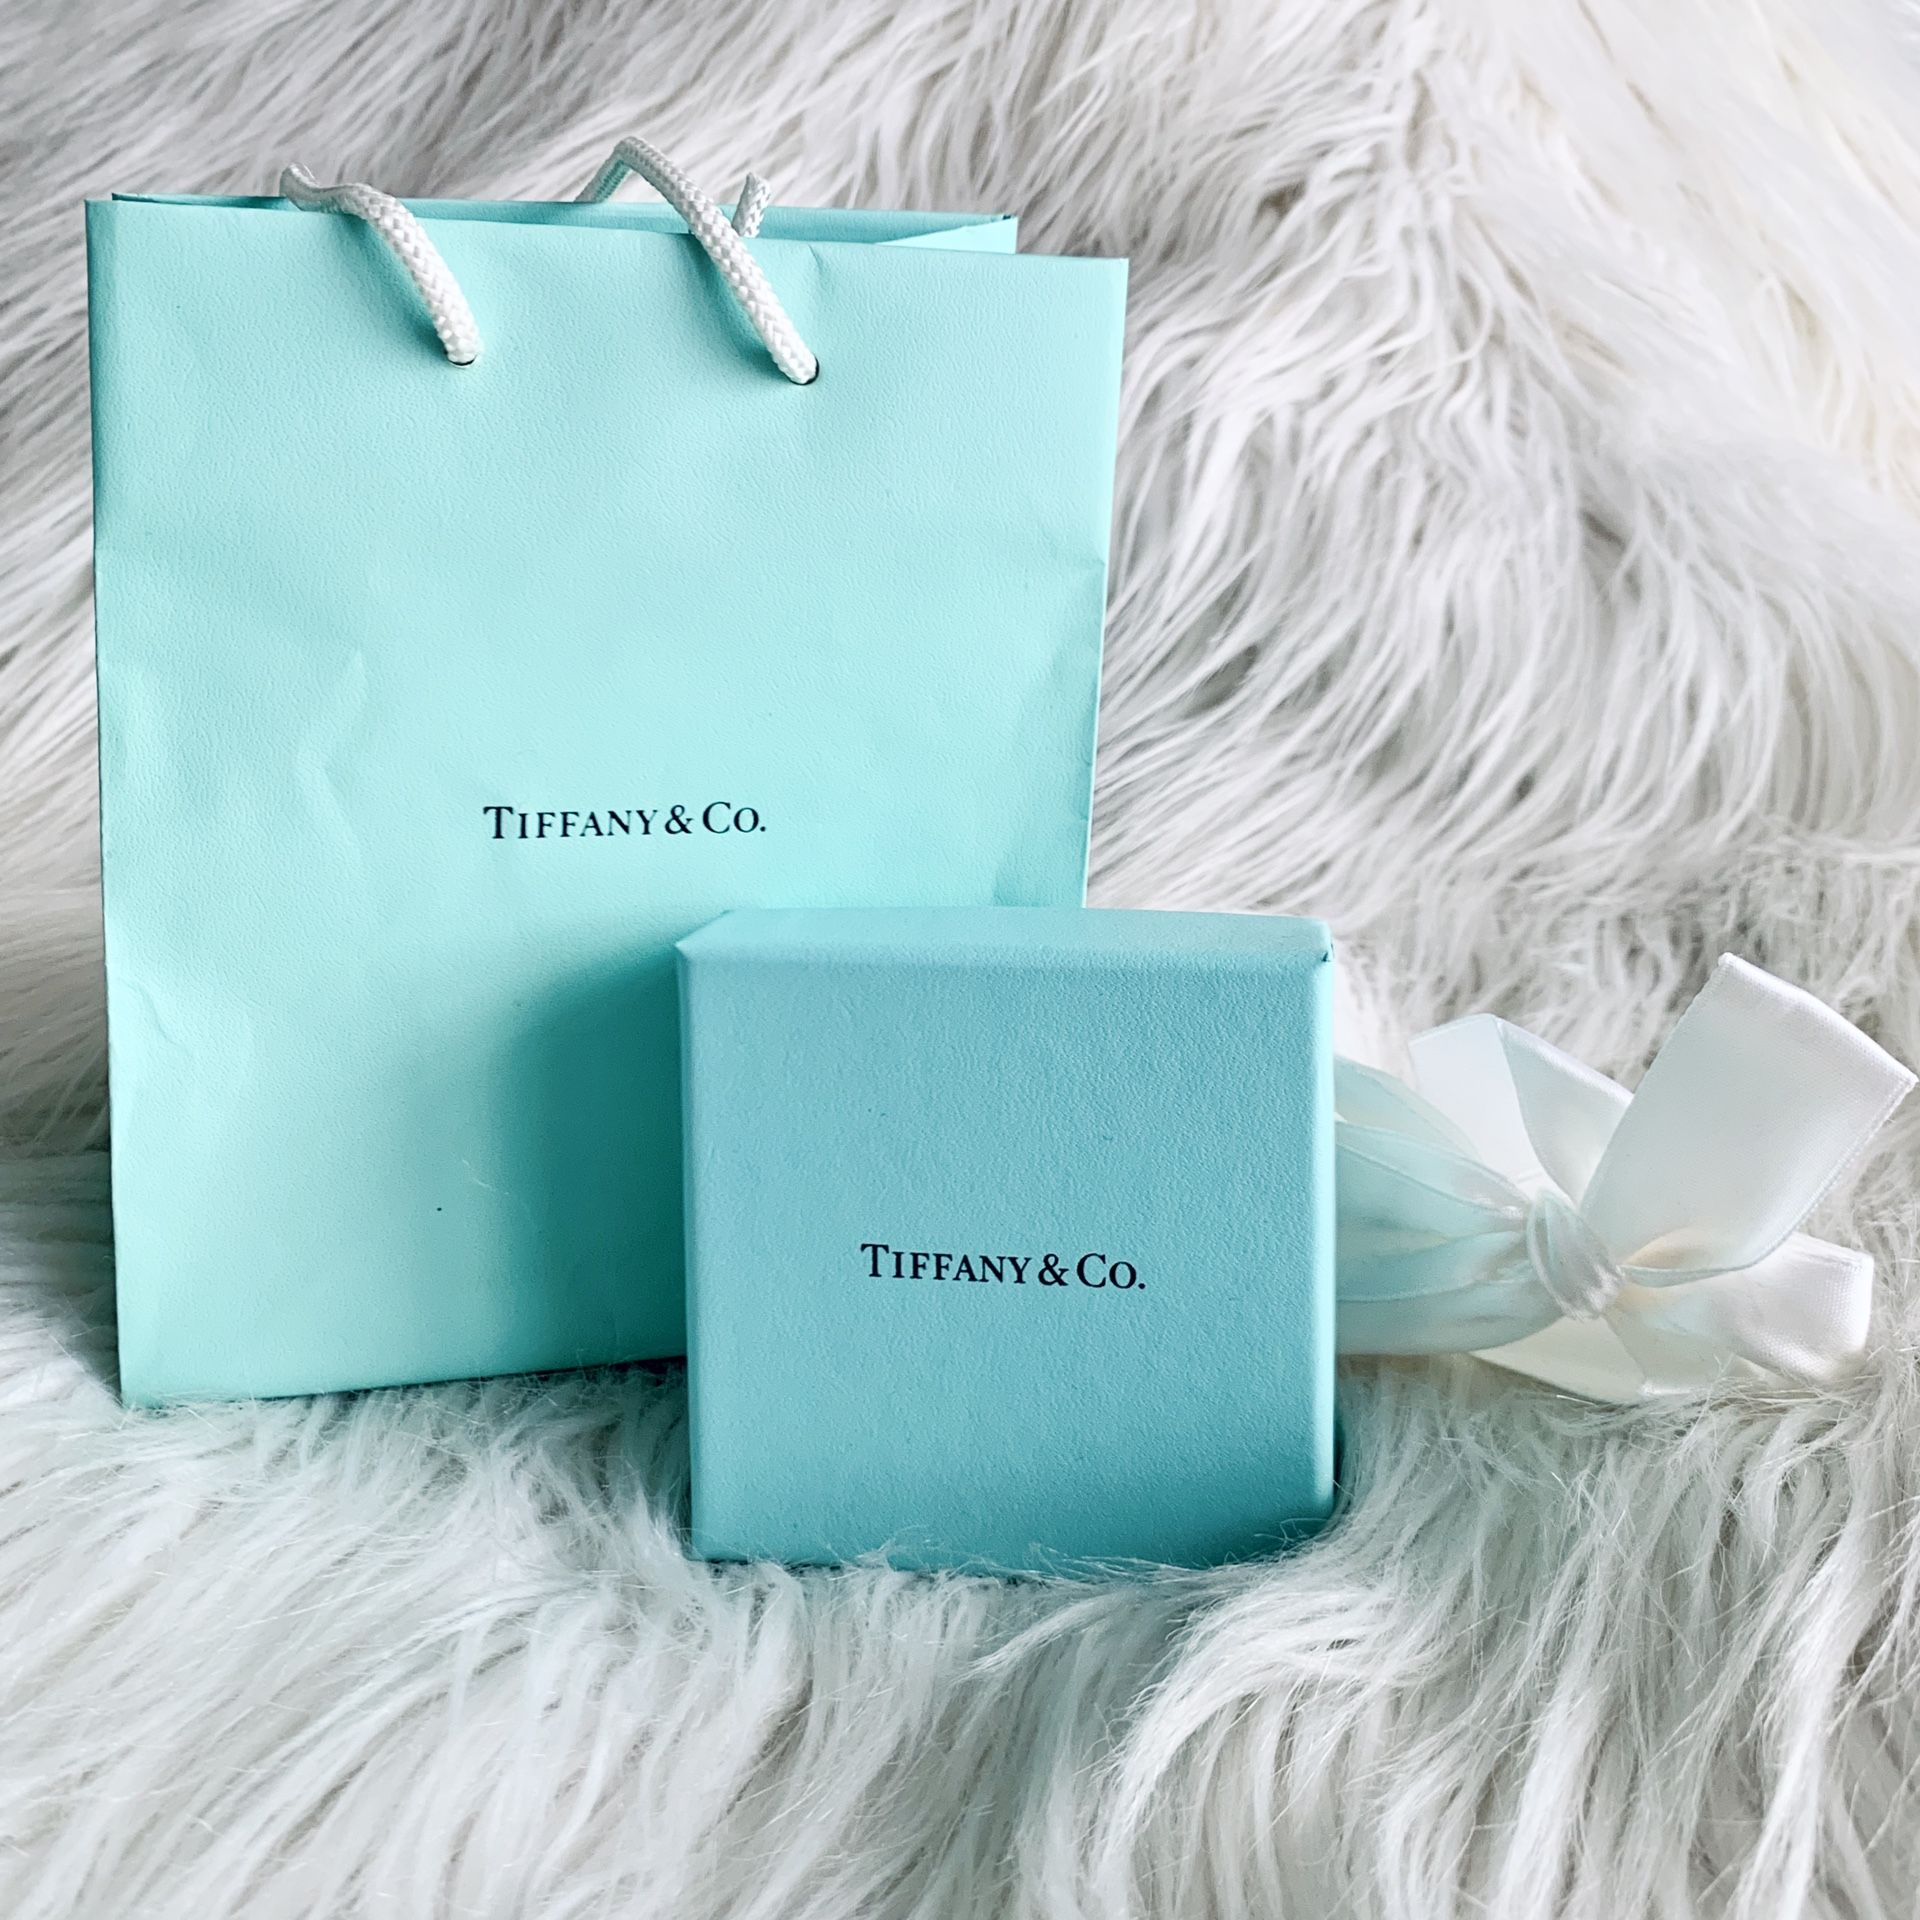 Tiffany and Co. Gift Box & Small Gift Bag